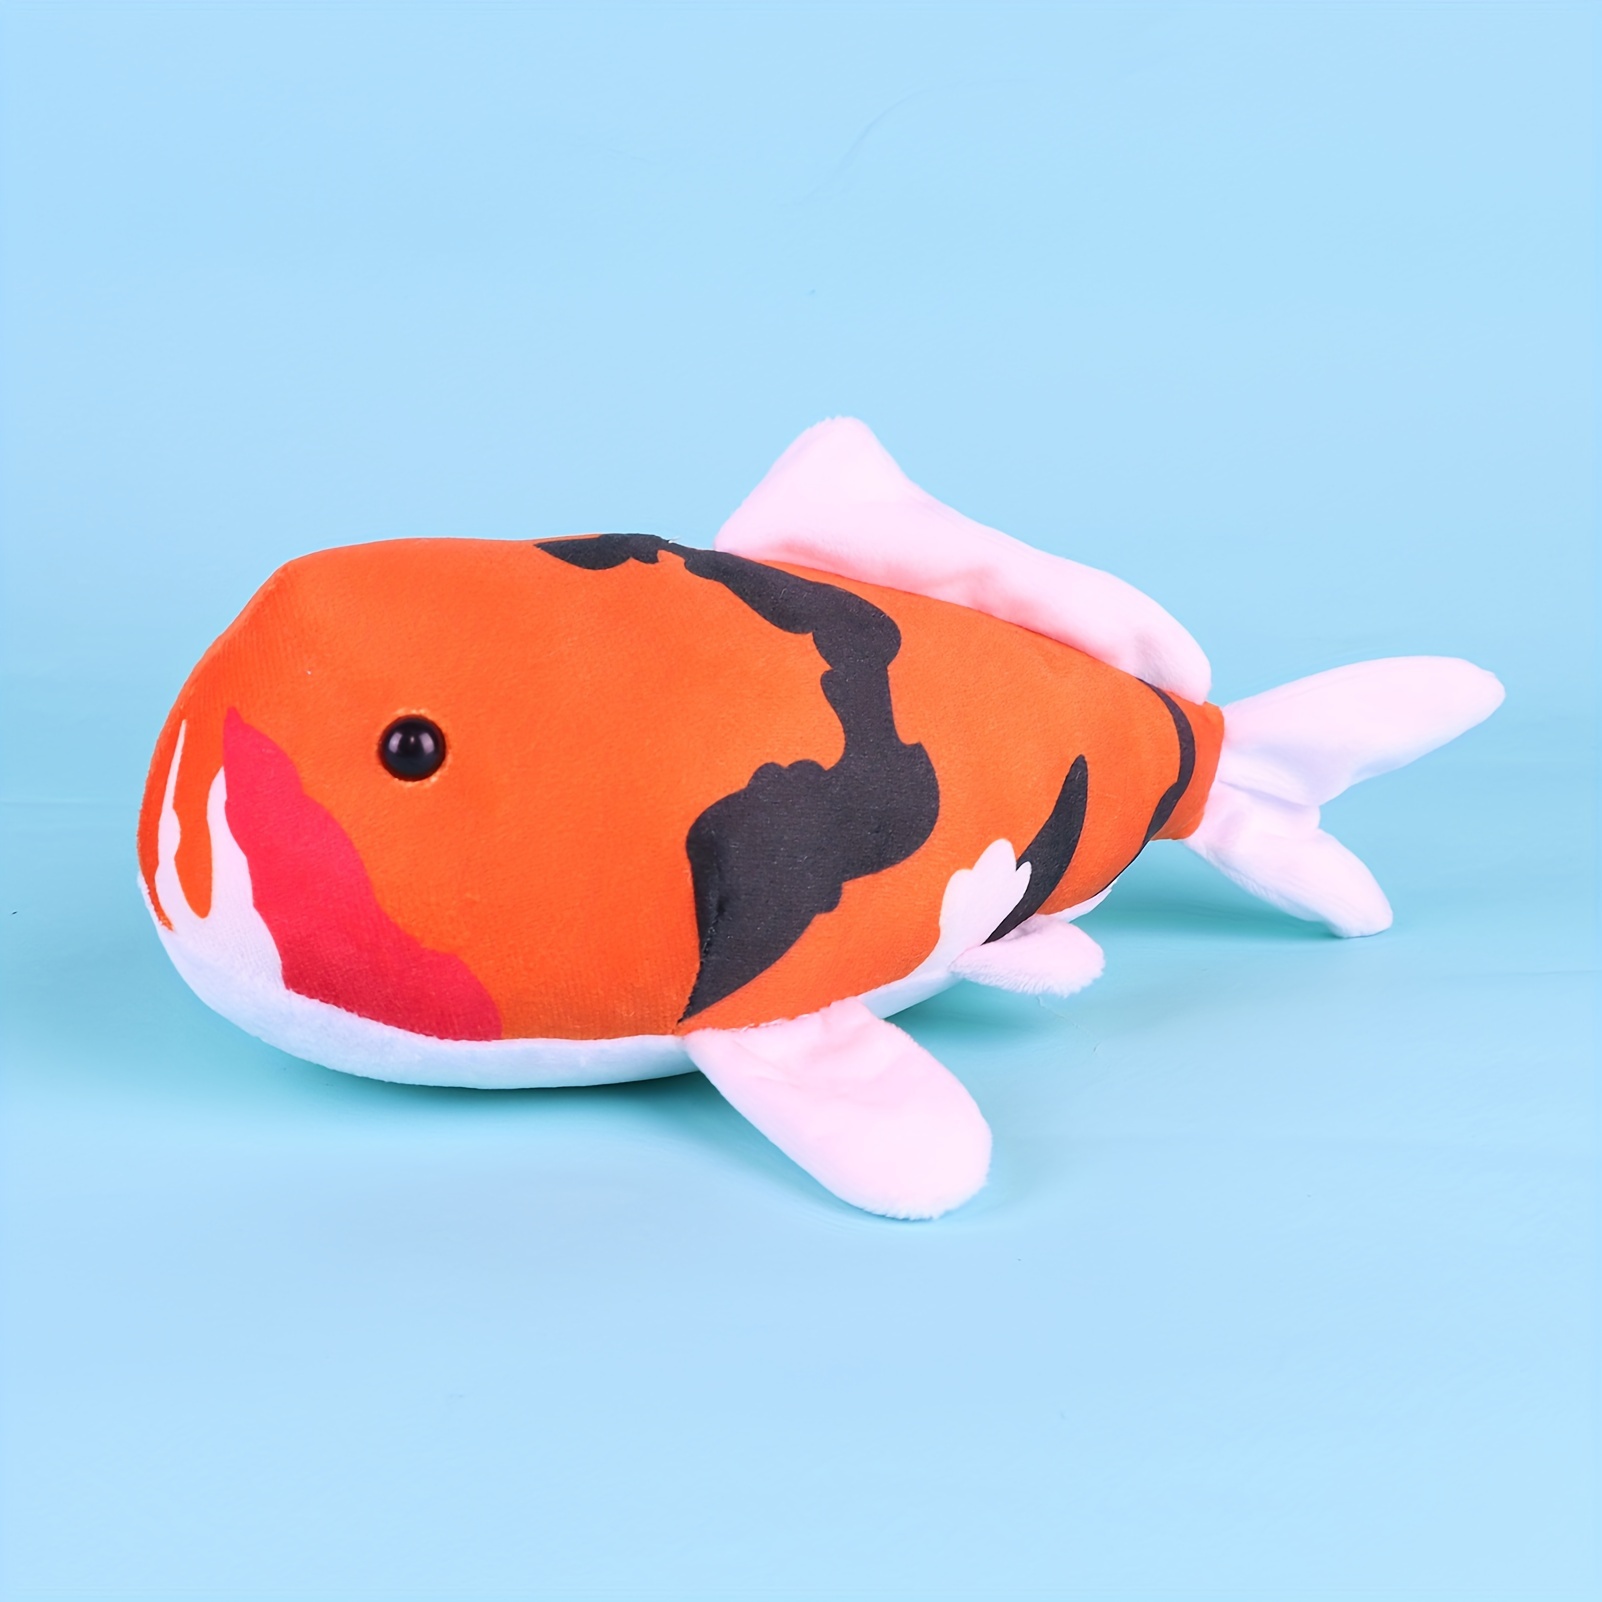 Koi Fish Plush Toy, Fluffy Soft Plushie Aesthetic Stuffed Animal